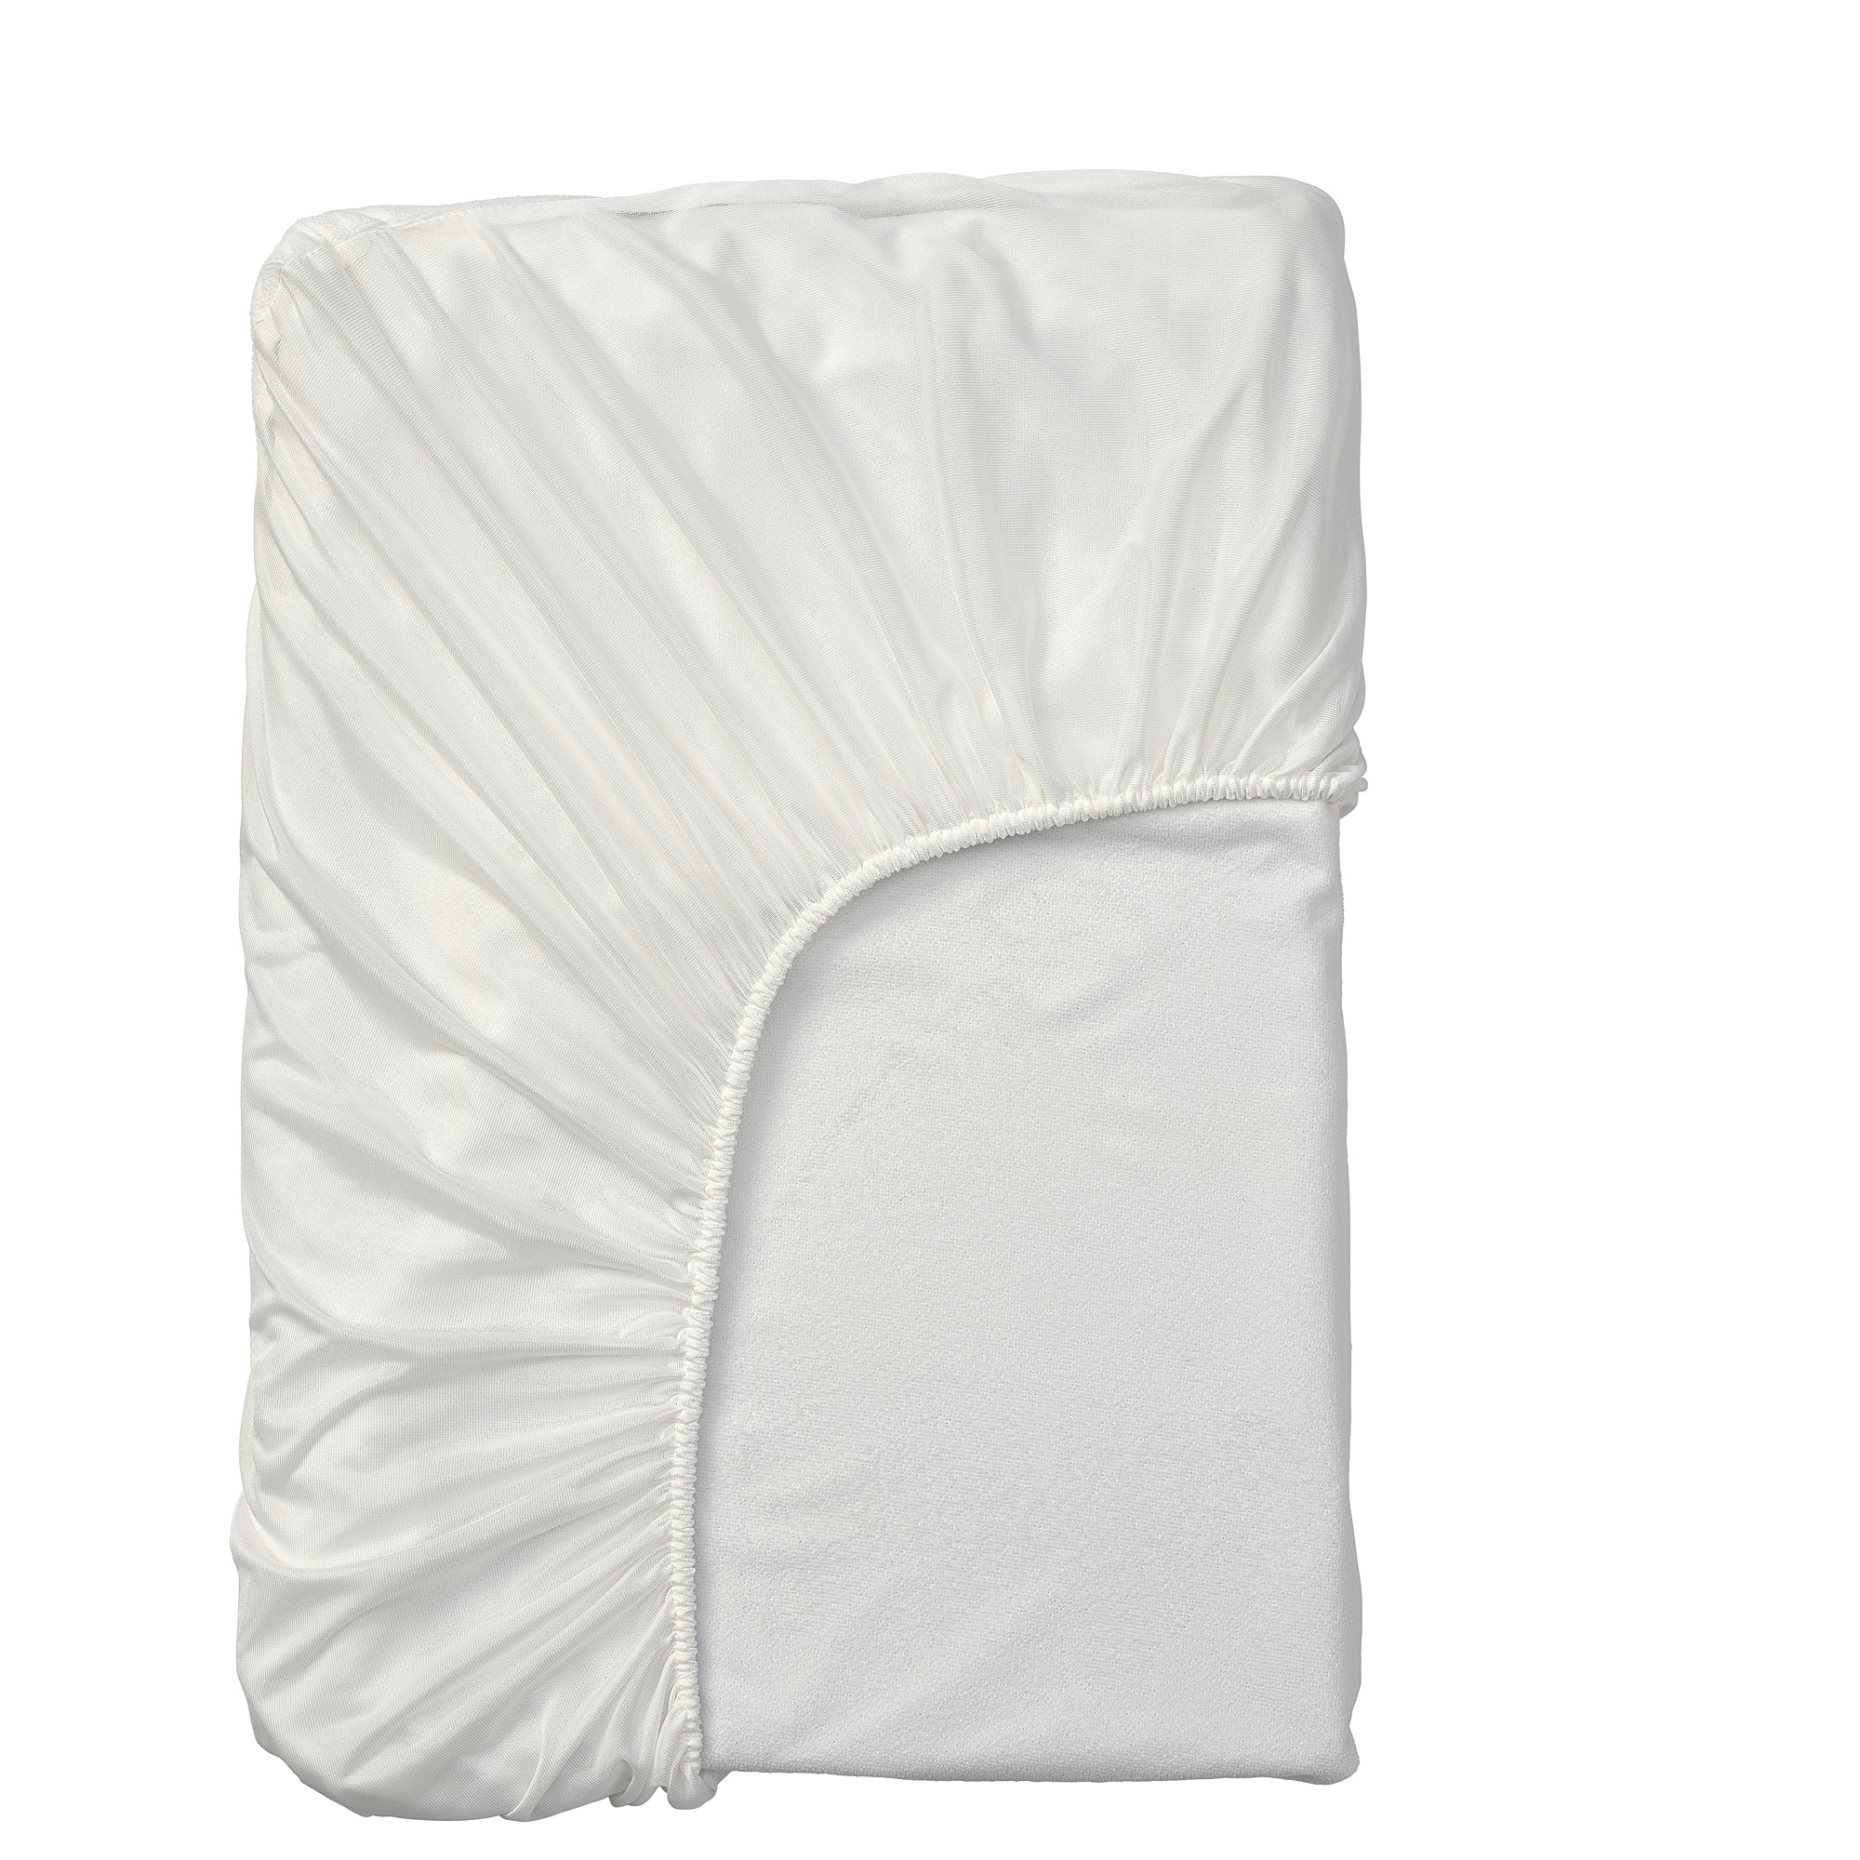 GRUSNARV, waterproof mattress protector, 180x200 cm, 005.221.32